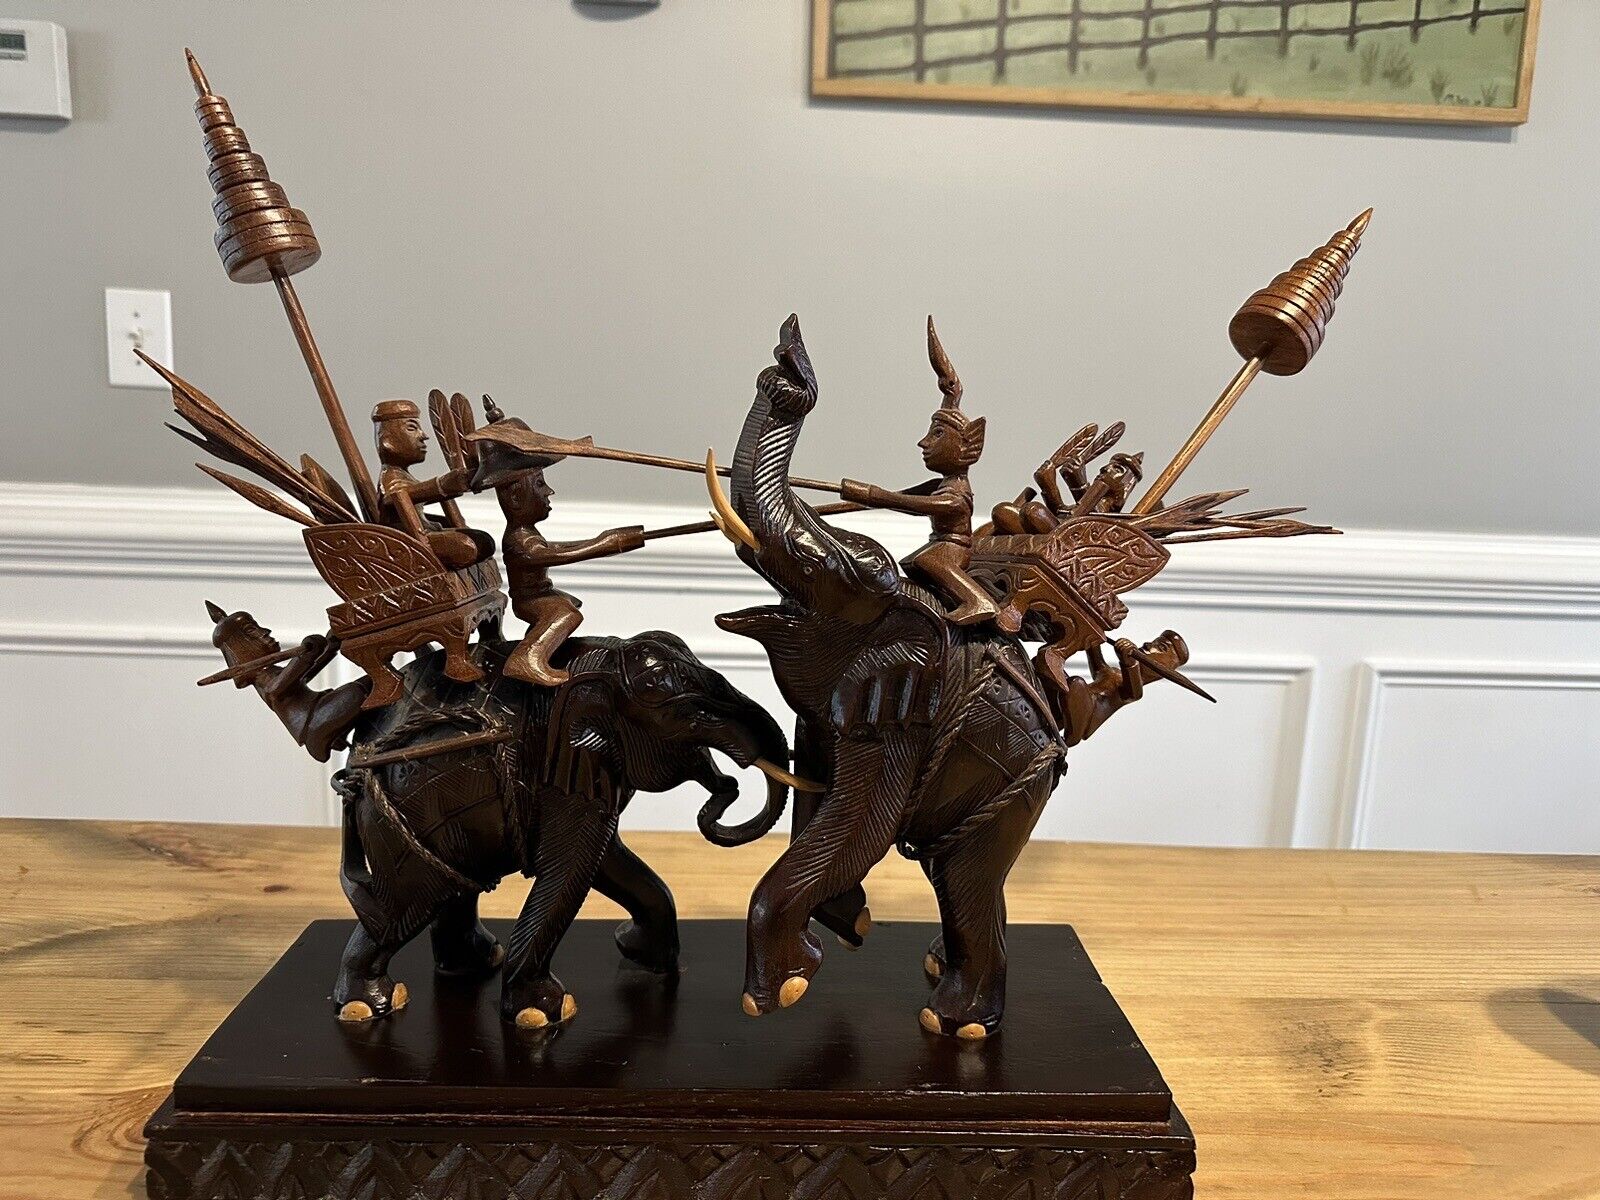 The Battle of Elephants, Vintage Indian Wooden Carved Figurines Joust Battle